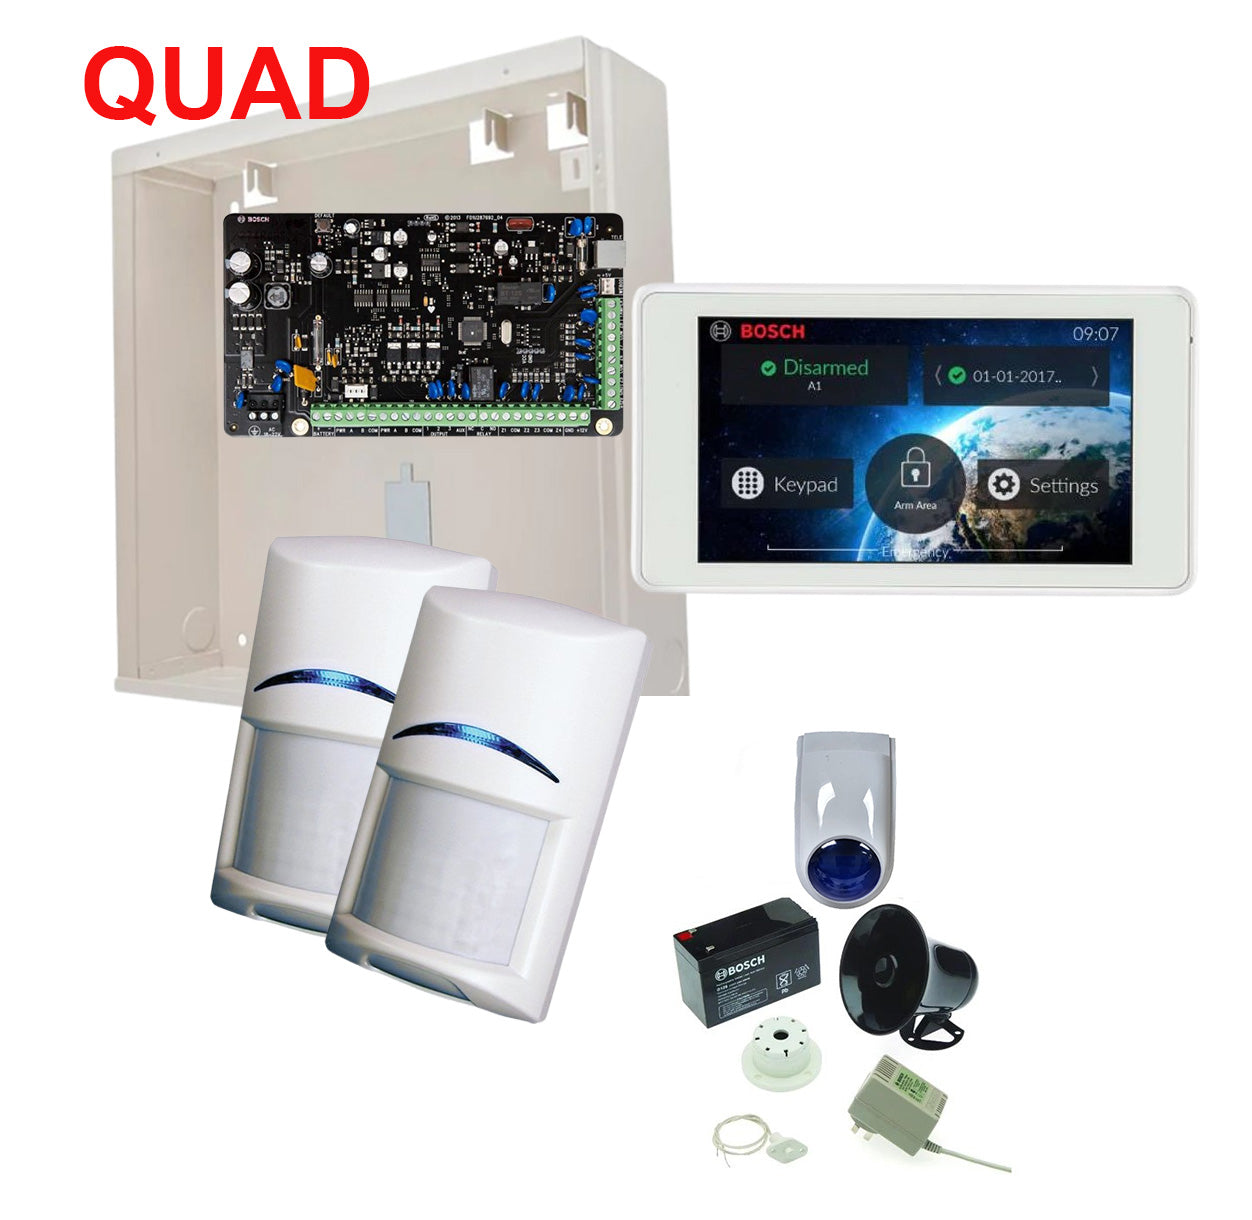 BOSCH, Solution 2000, Alarm kit, ICP-SOL2-P panel, 5" Touchscreen keypad, 2x QUAD PIR detectors